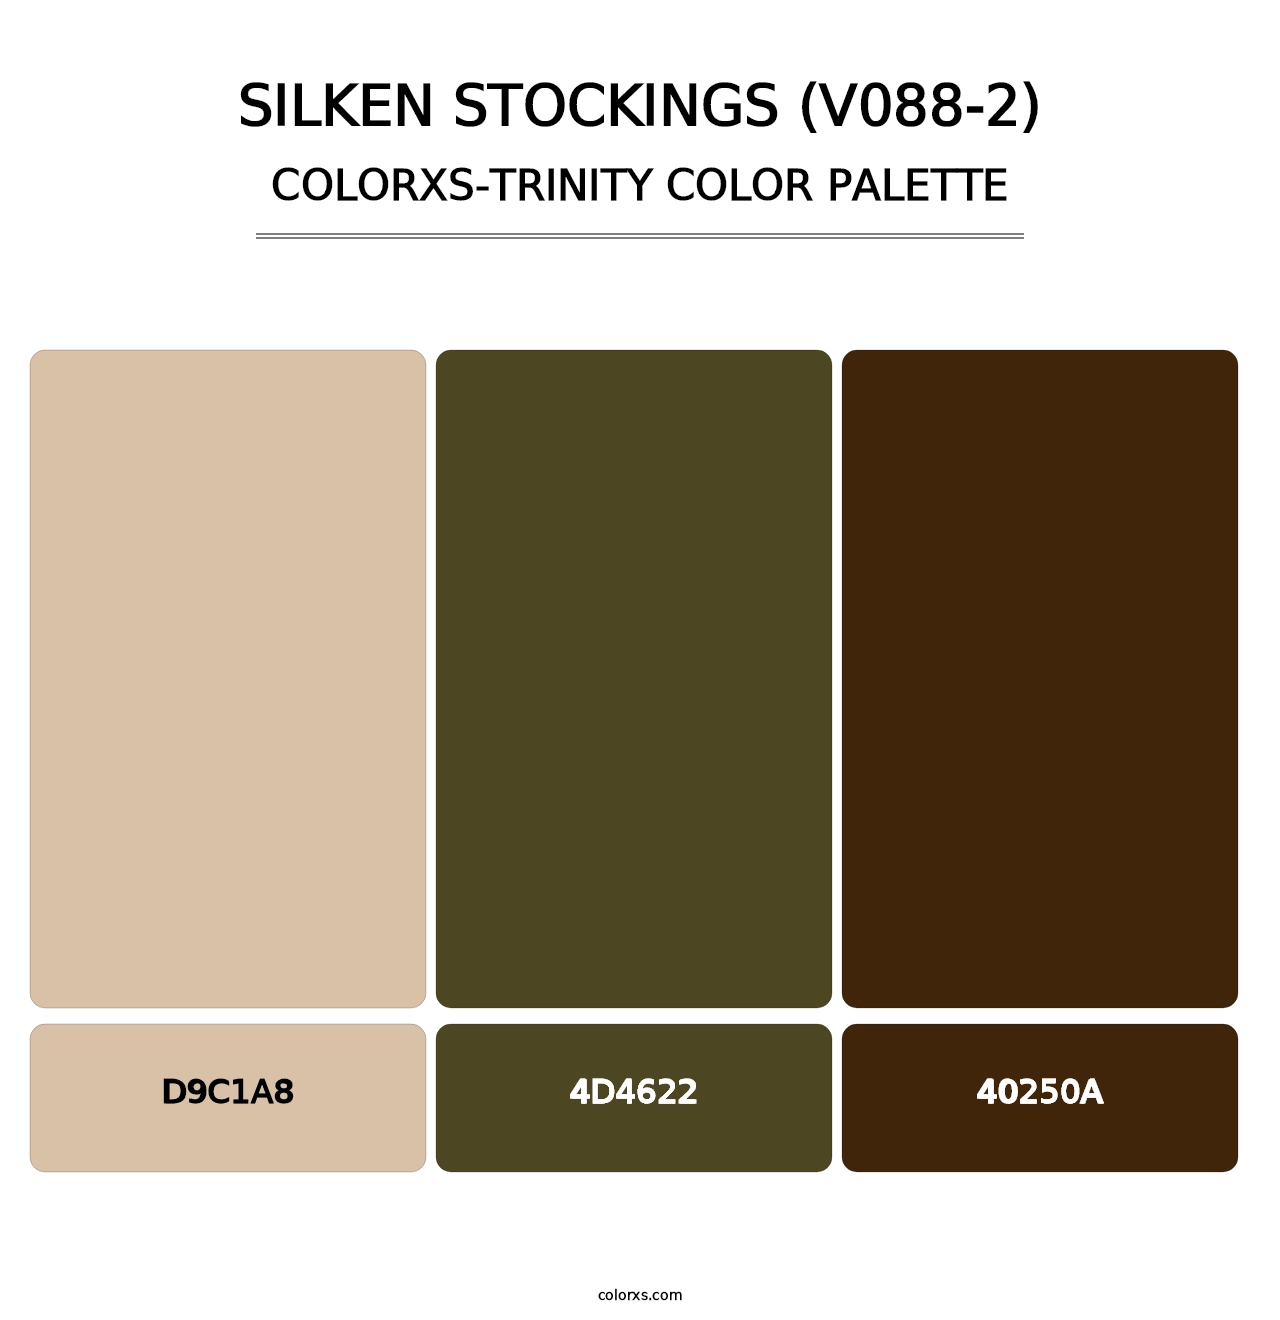 Silken Stockings (V088-2) - Colorxs Trinity Palette